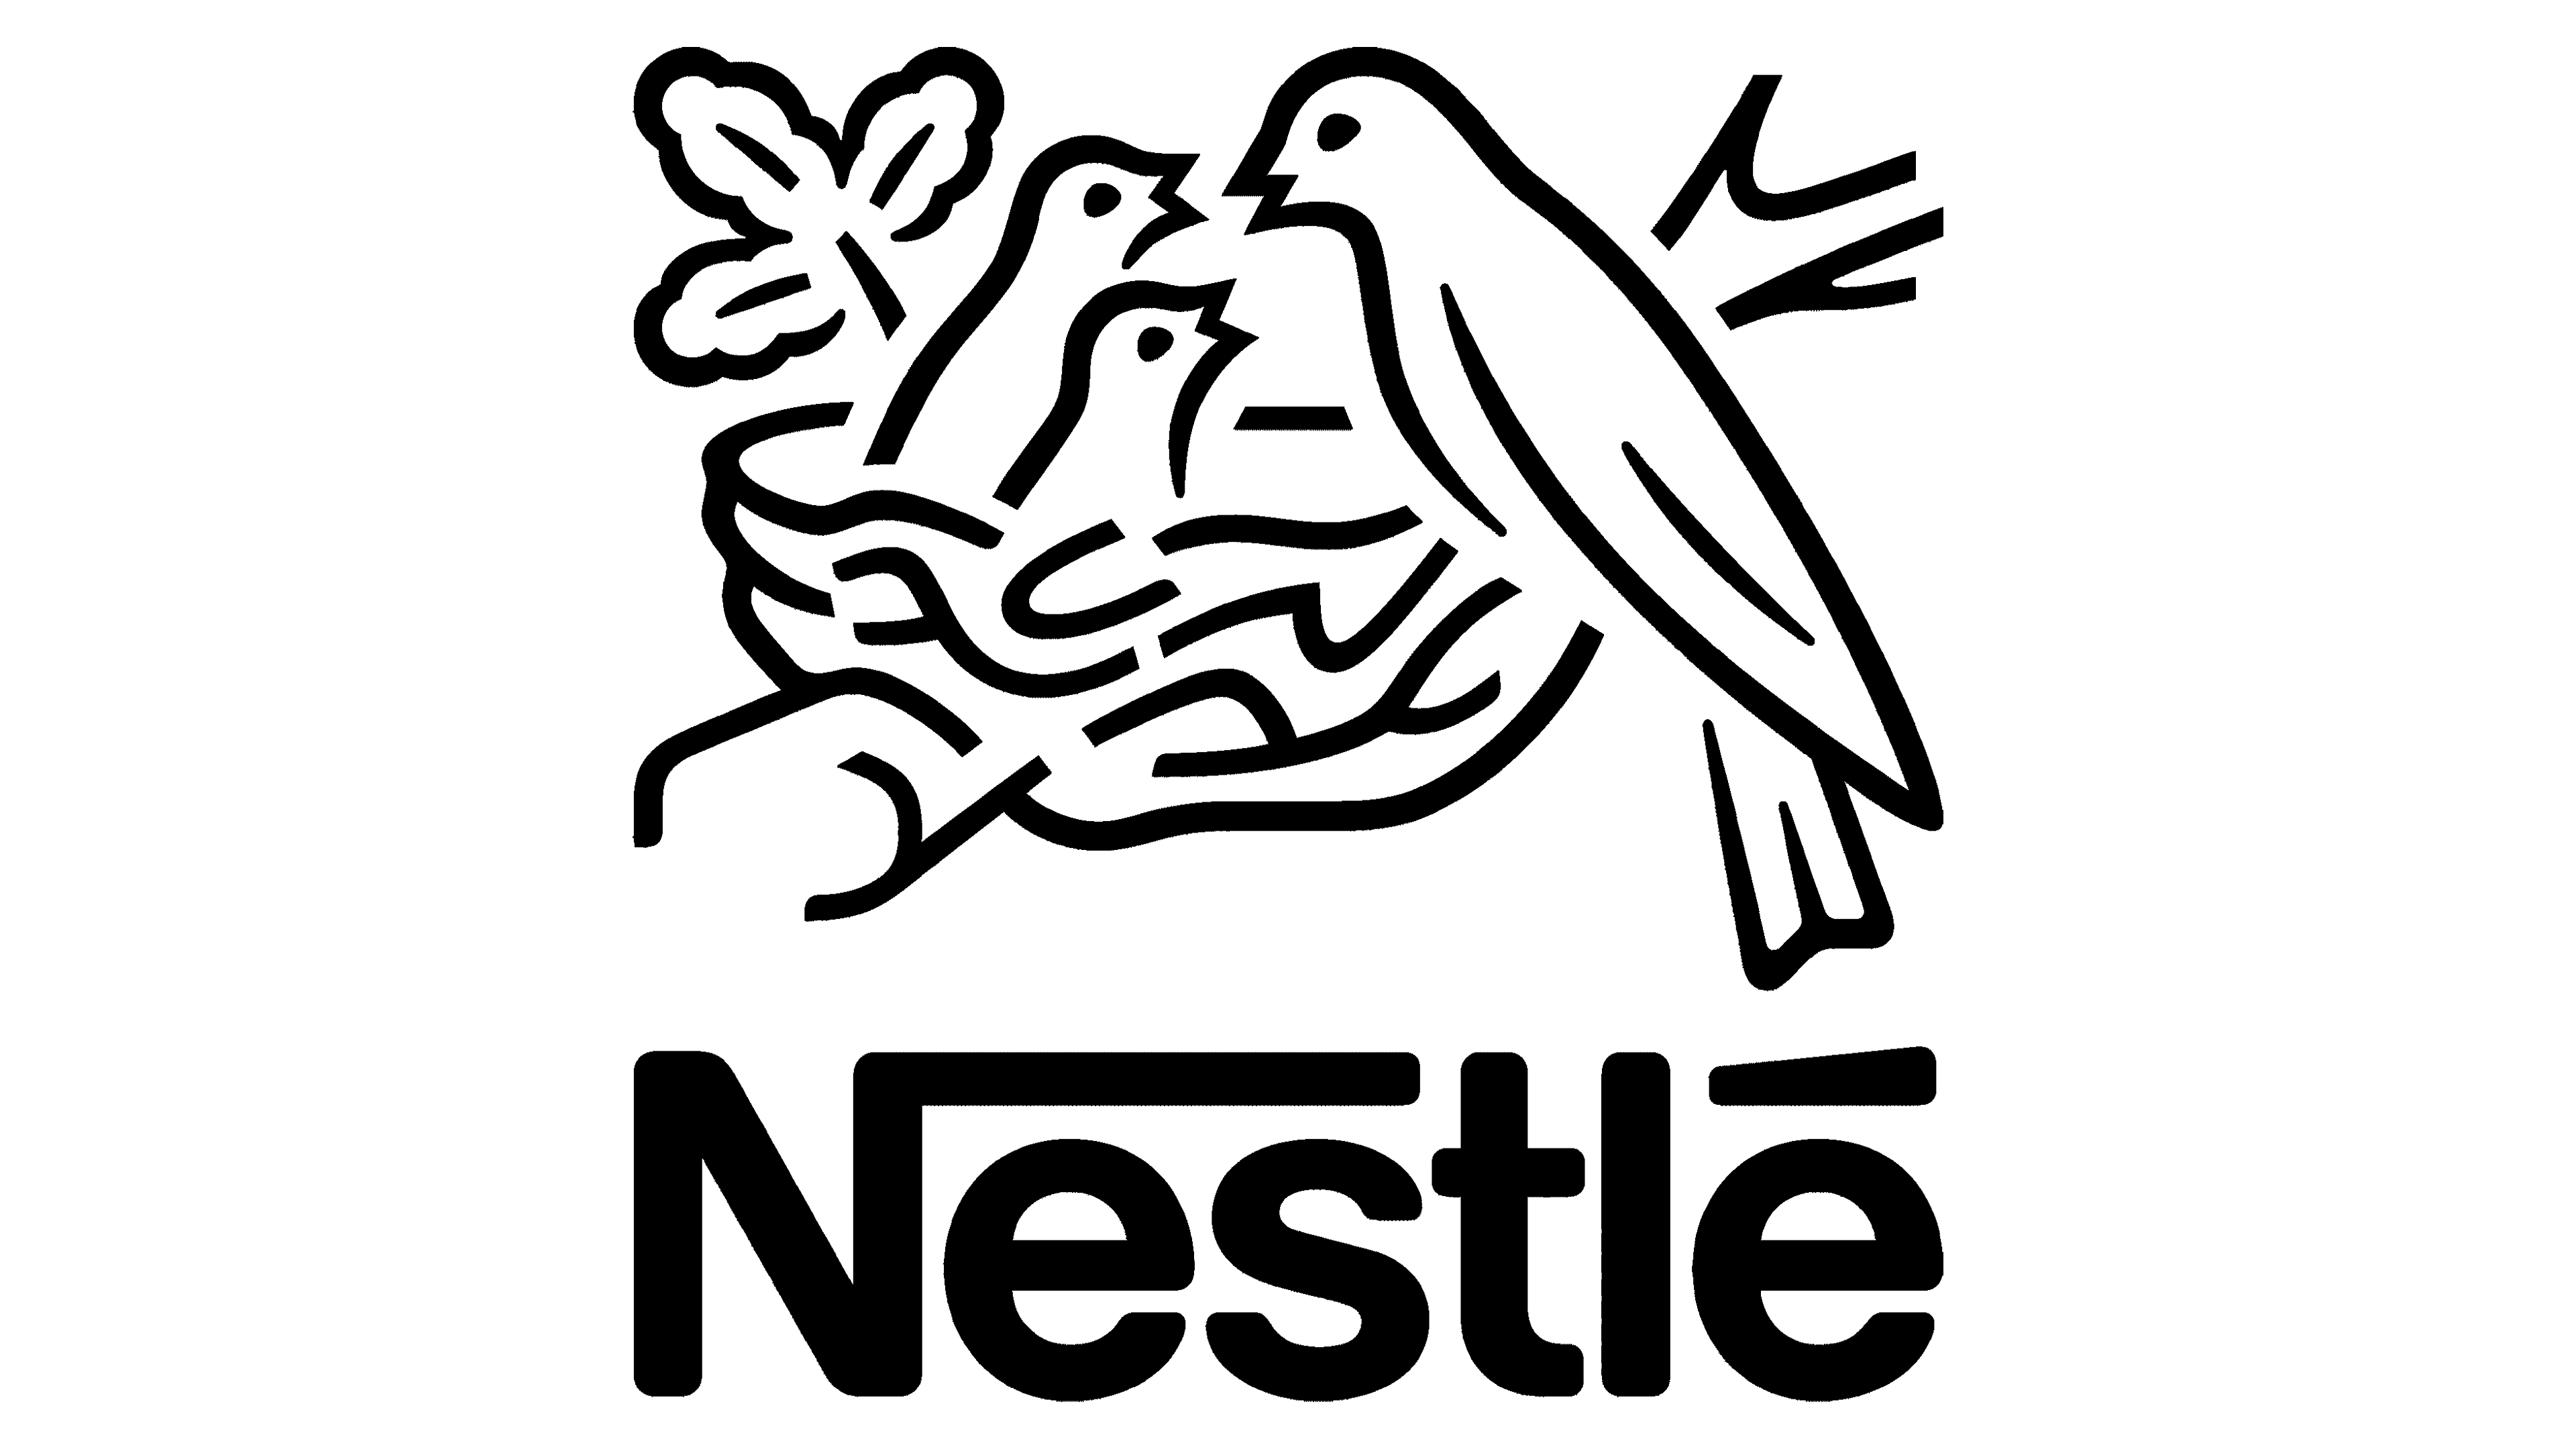 Nestle (palforzia Business)